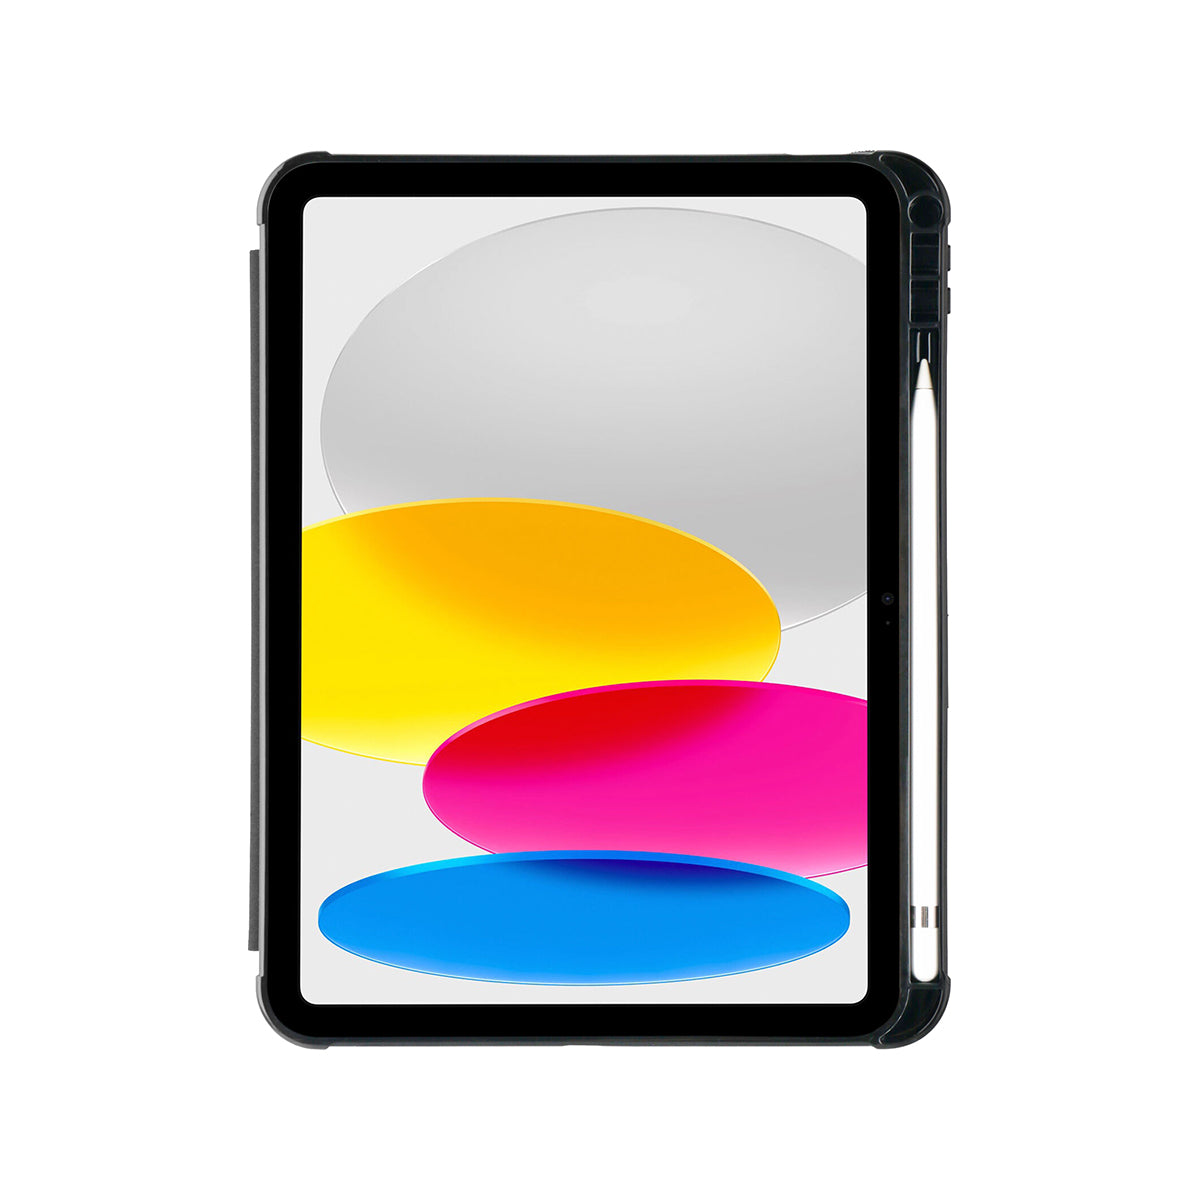 Otterbox React Folio ipad Case For - iPad 10.9 Gen 10 - Red/Black